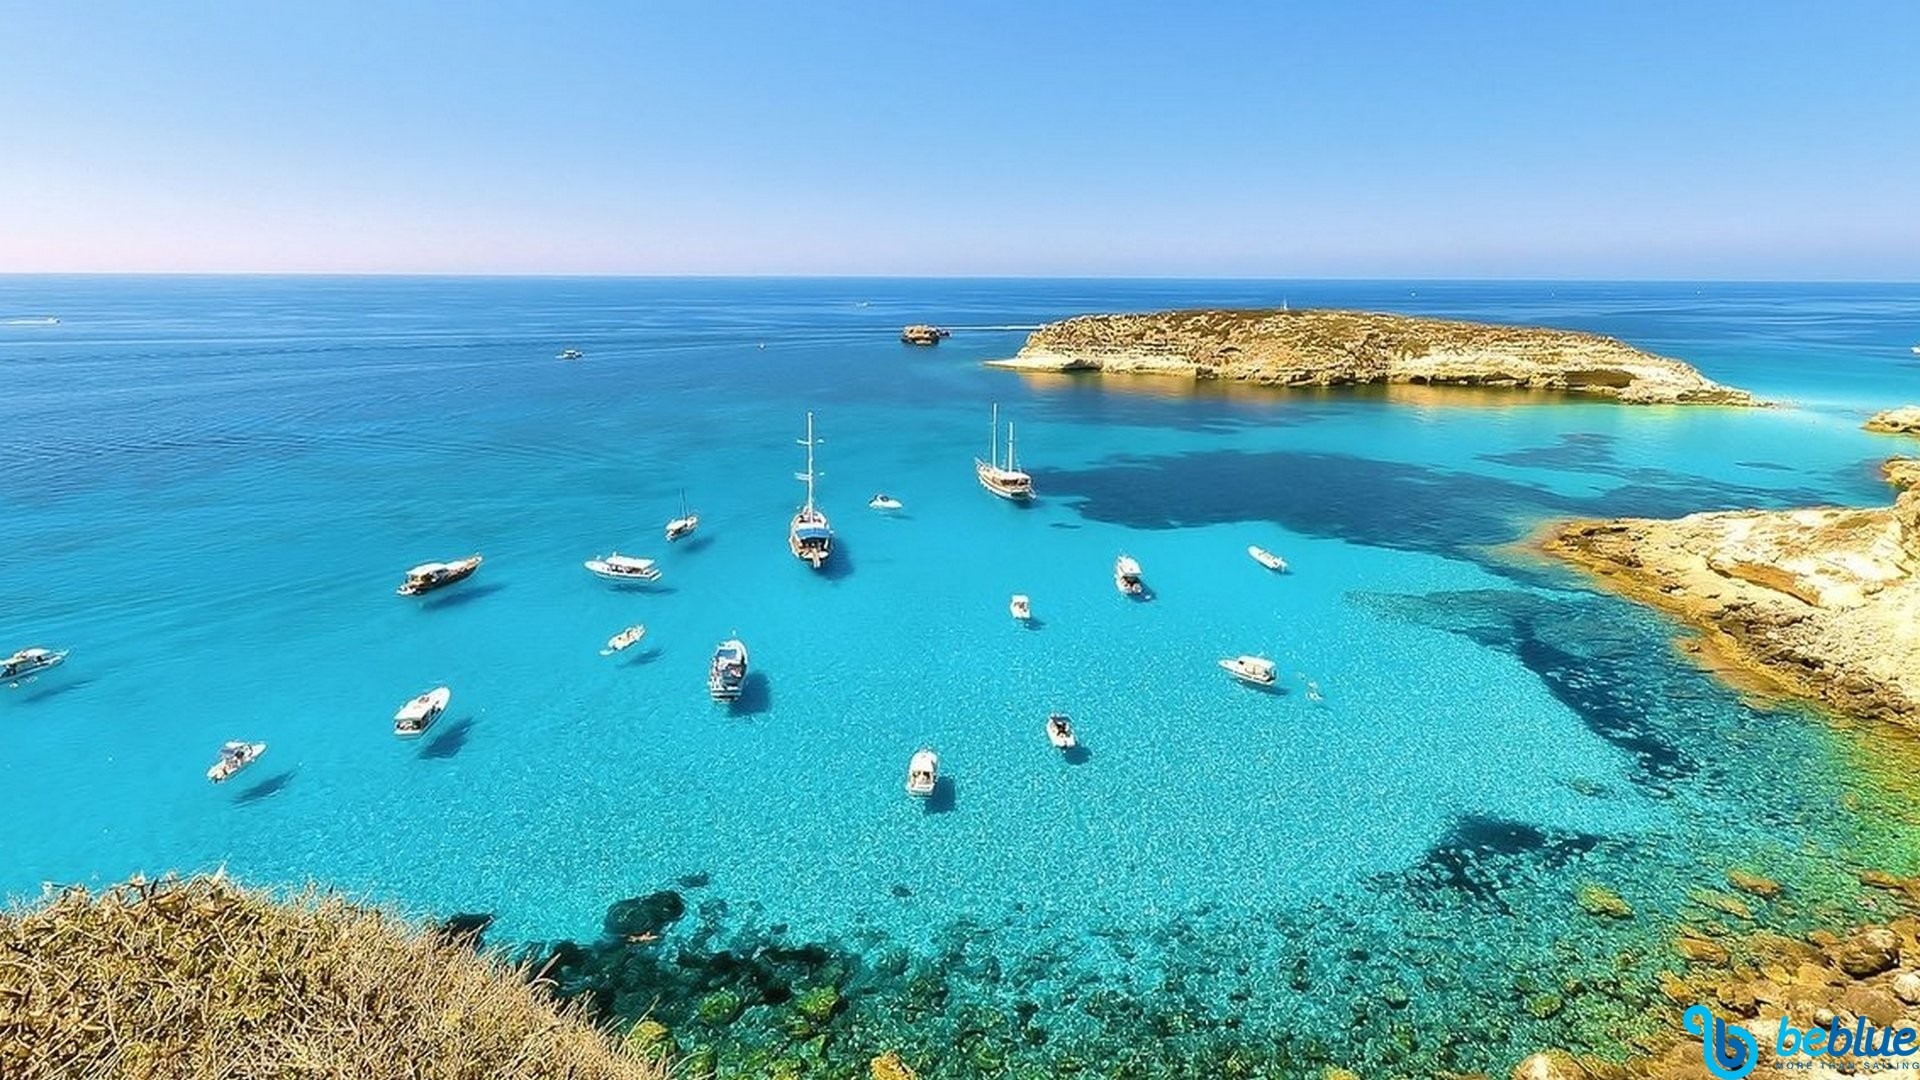 Malta, Lampedusa and Linosa Flotilla: 11 days "All inclusive"